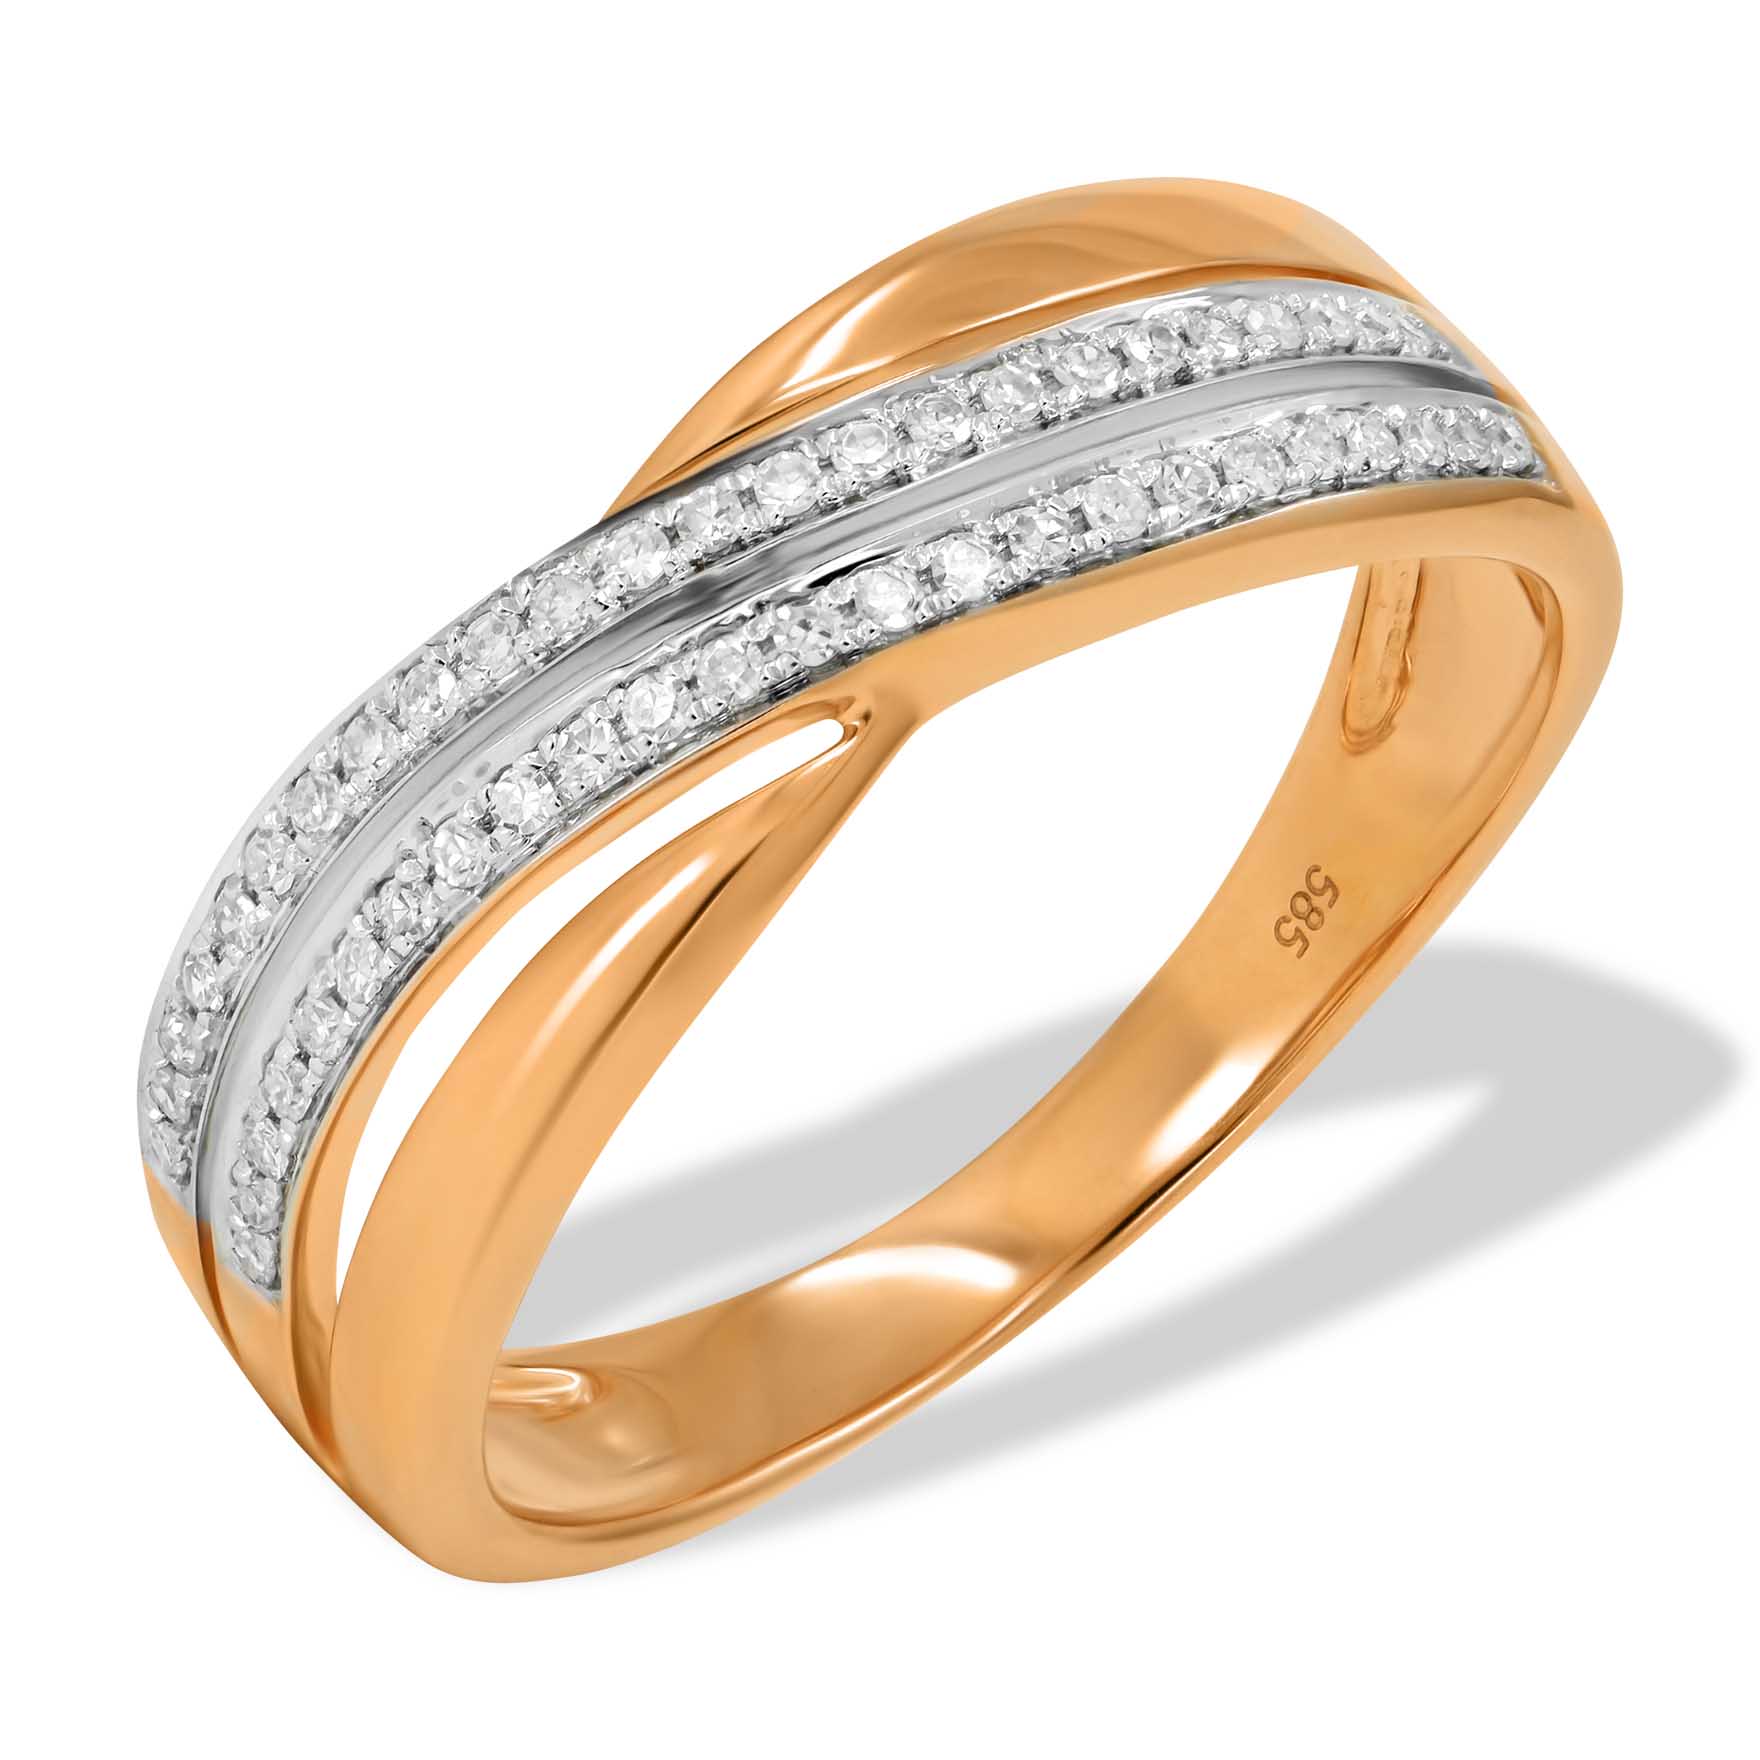 Multistone 14k Gold Ring Gift Idea Minimalist Ring - Etsy